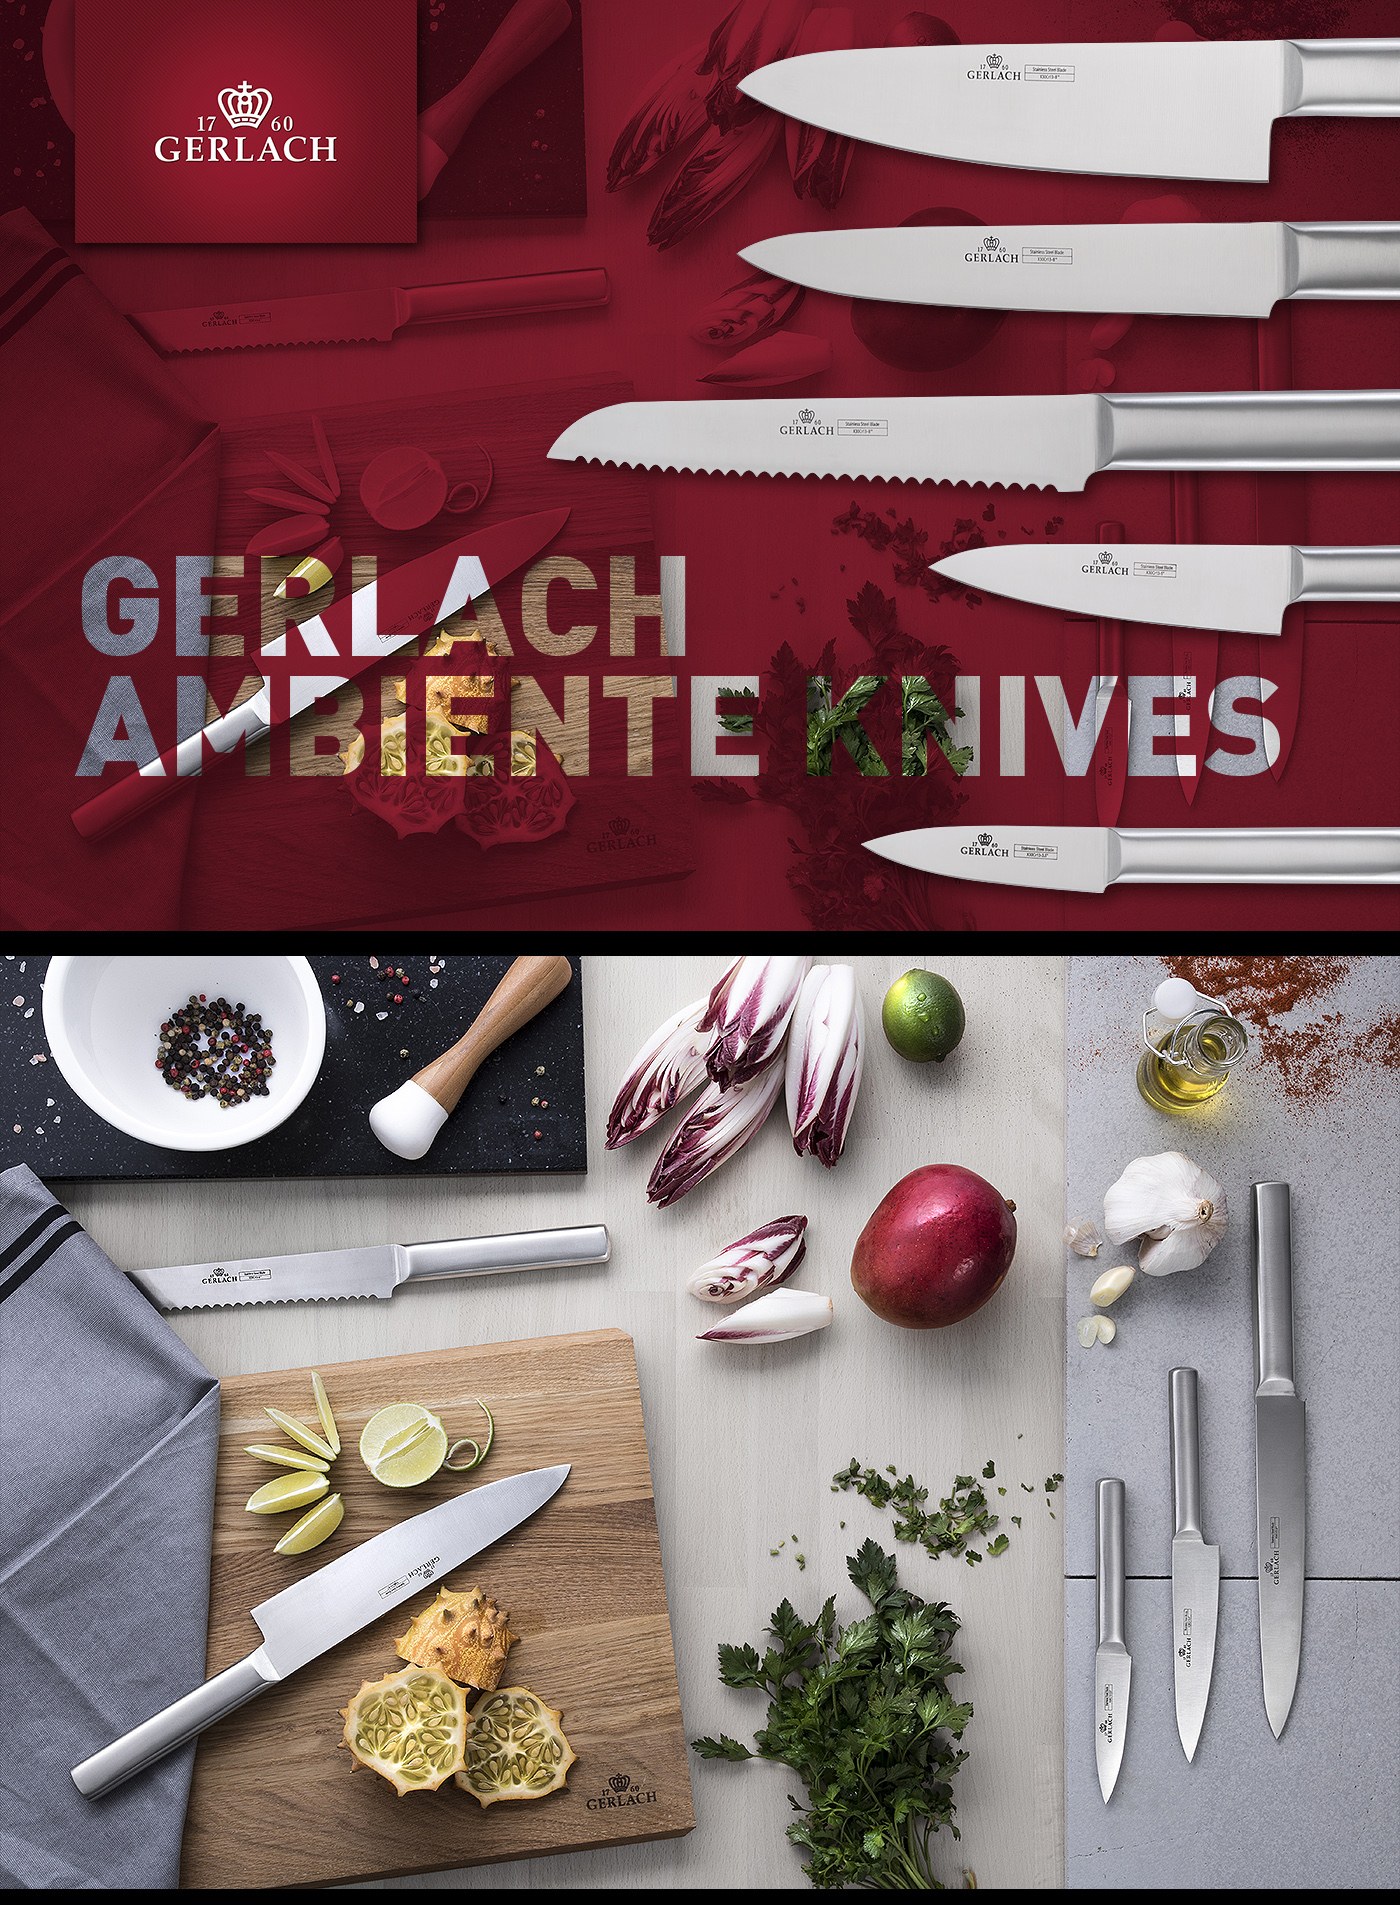 knives kitchen gerlach Advertising 